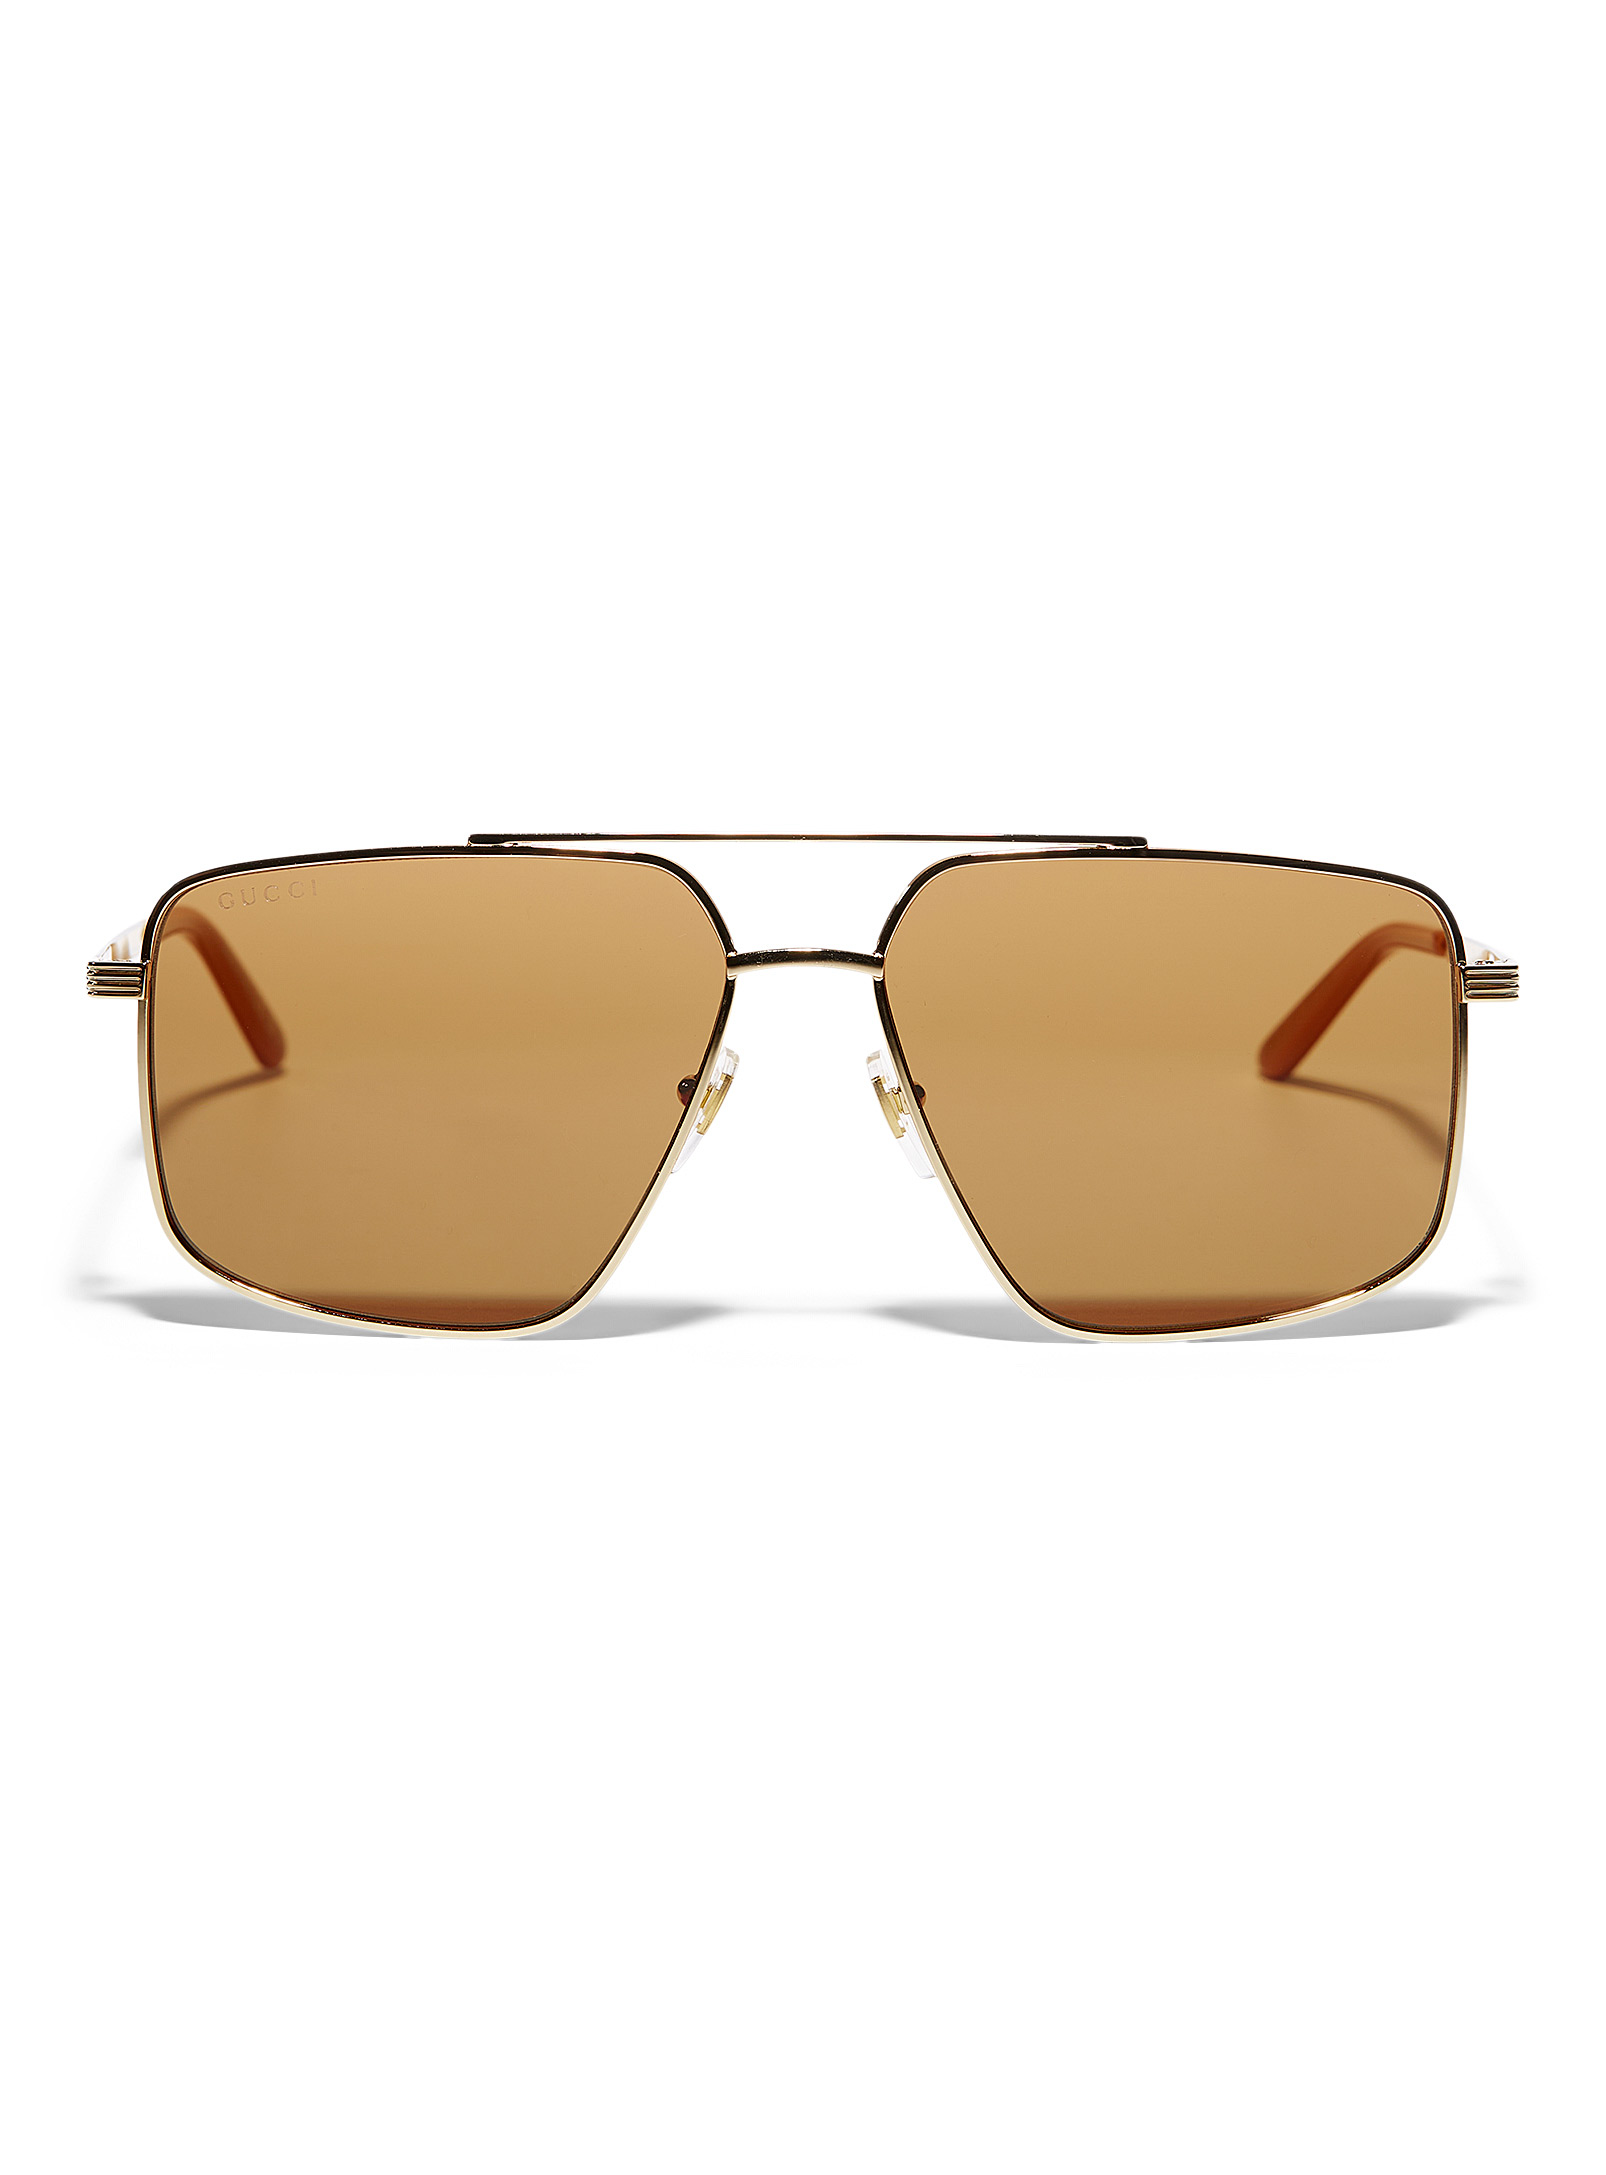 Gucci - Men's Metallic gold geometric aviator sunglasses